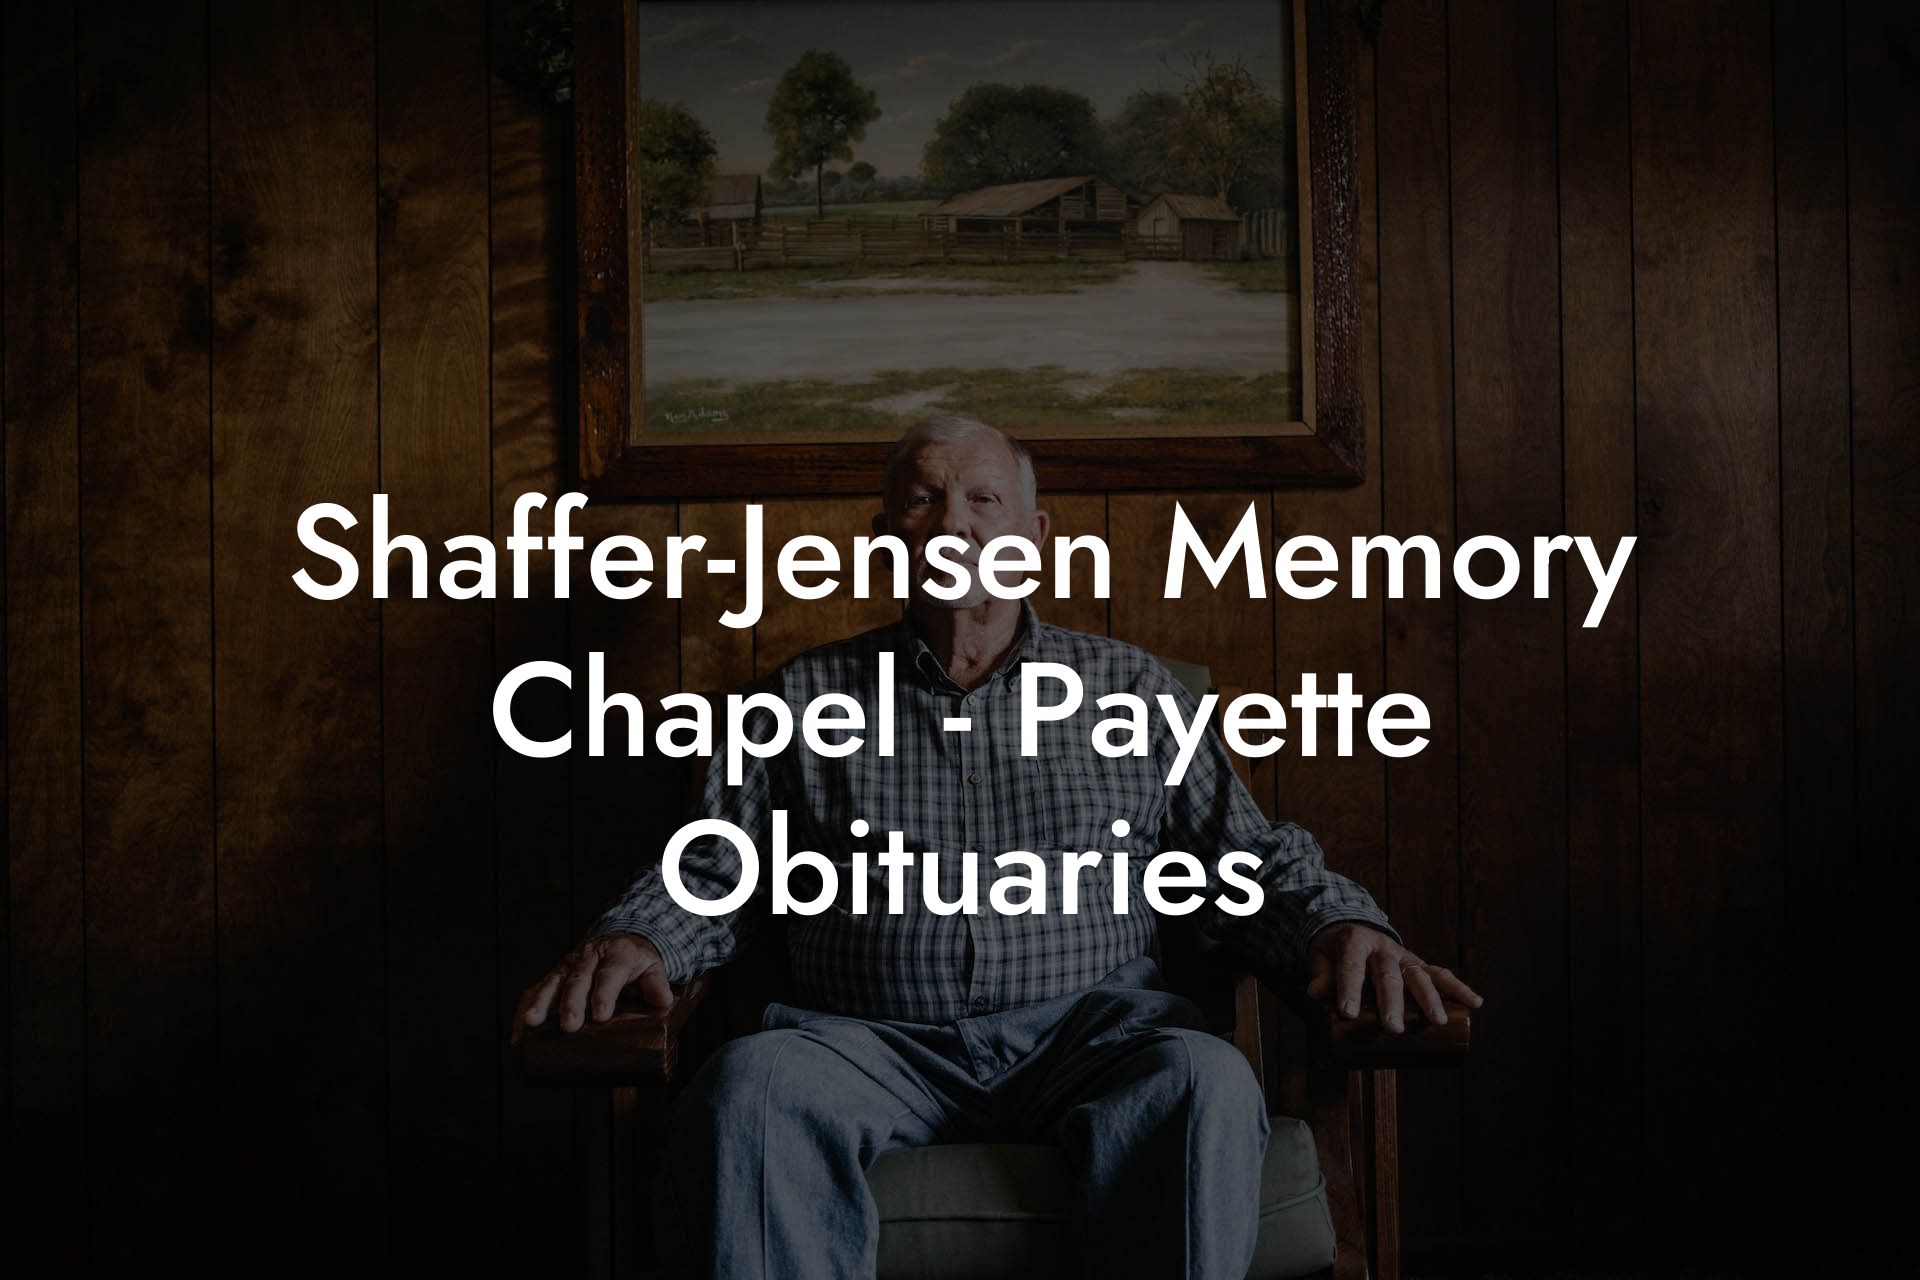 Shaffer-Jensen Memory Chapel - Payette Obituaries